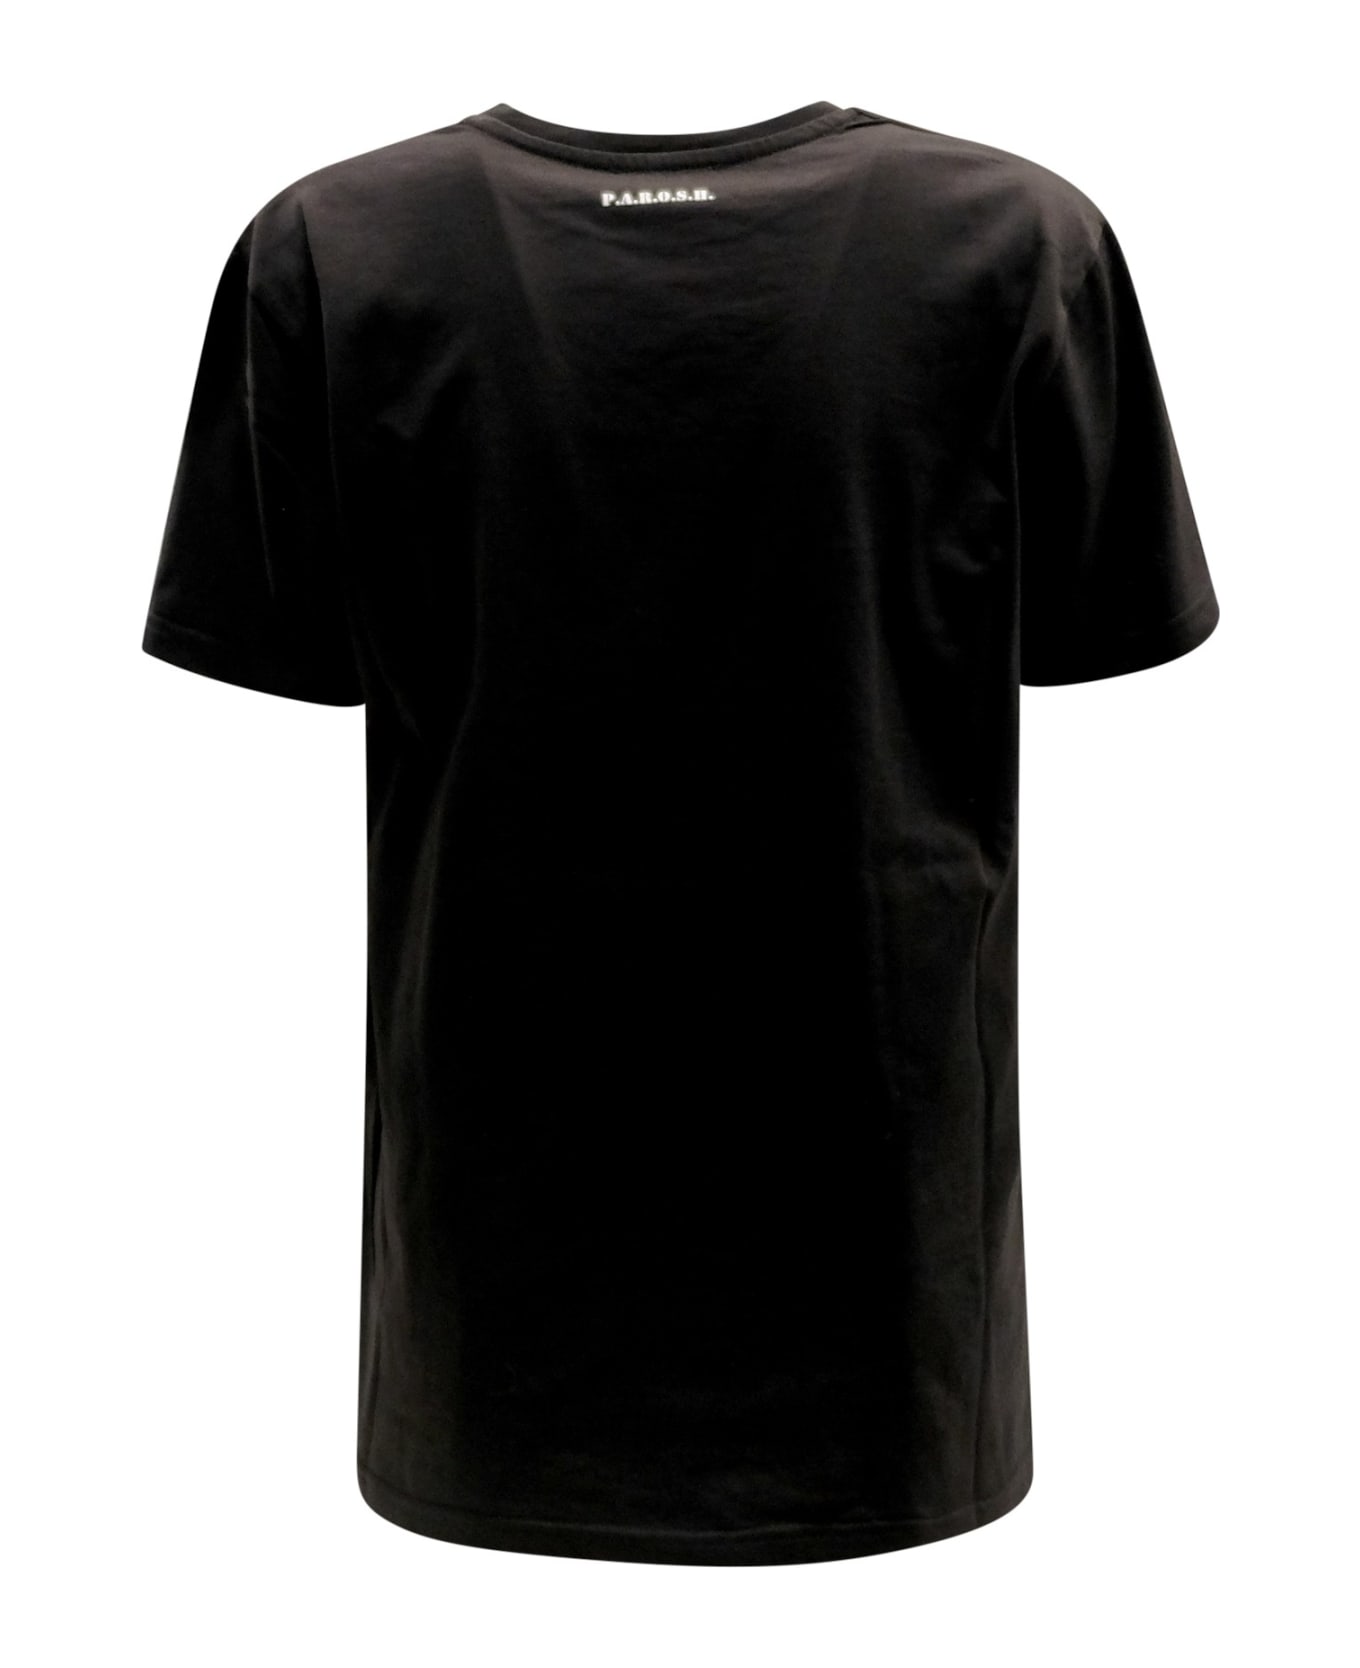 Parosh 013 Culmine Black Cotton T-shirt